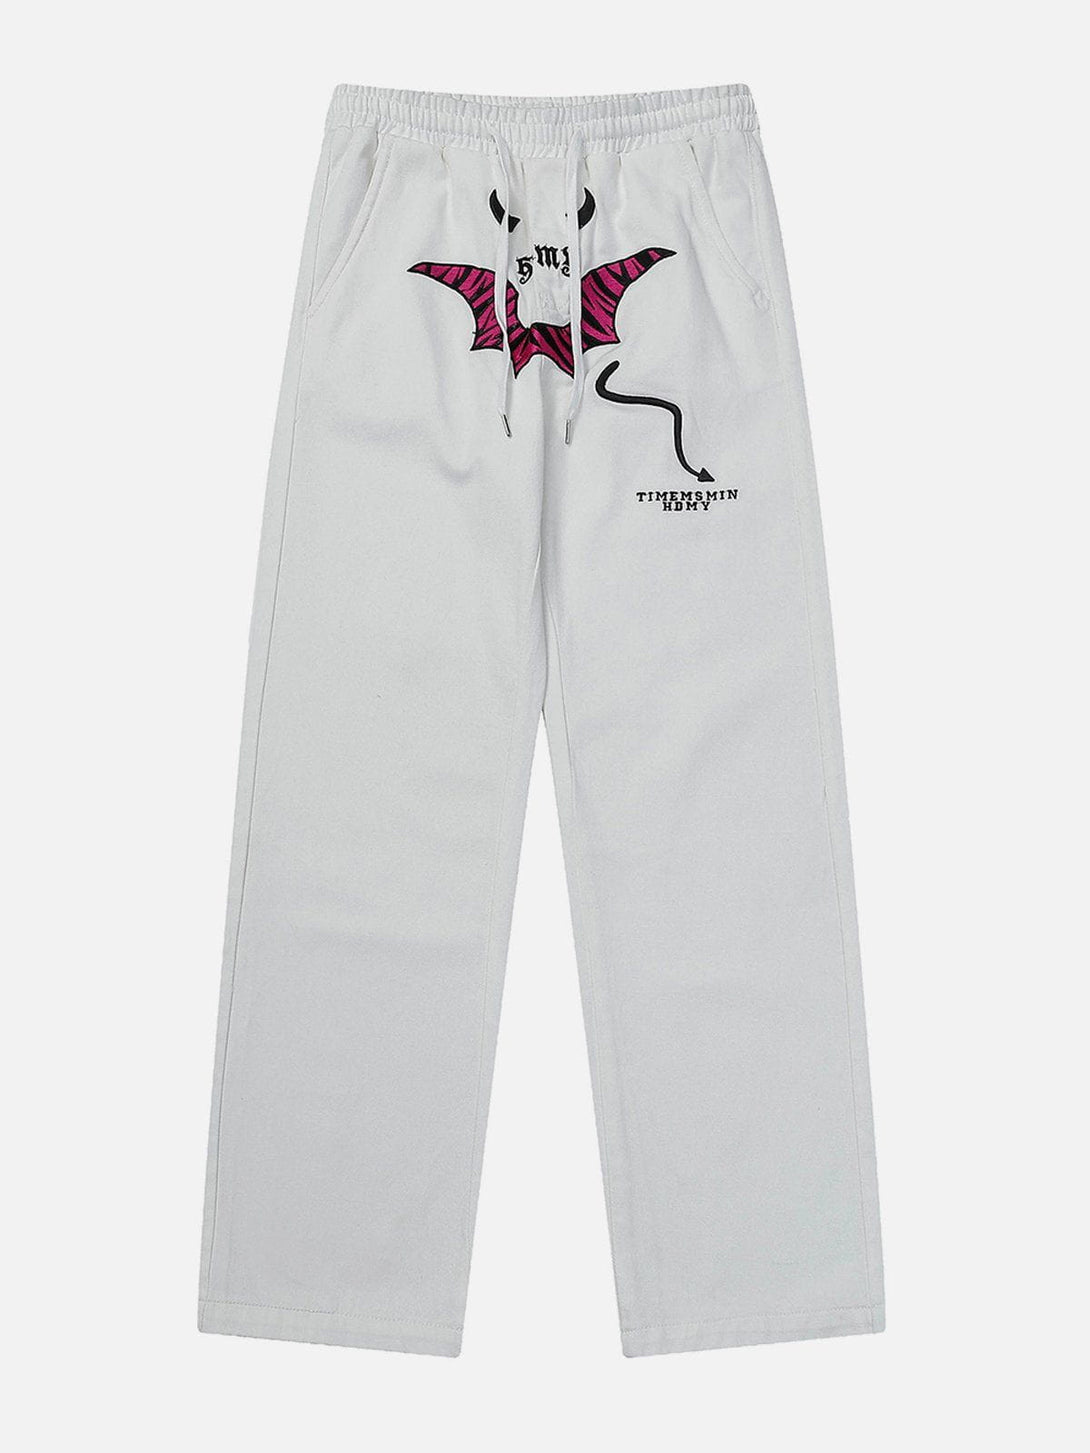 Levefly - Cartoon Bat Elastic Pants - Streetwear Fashion - levefly.com